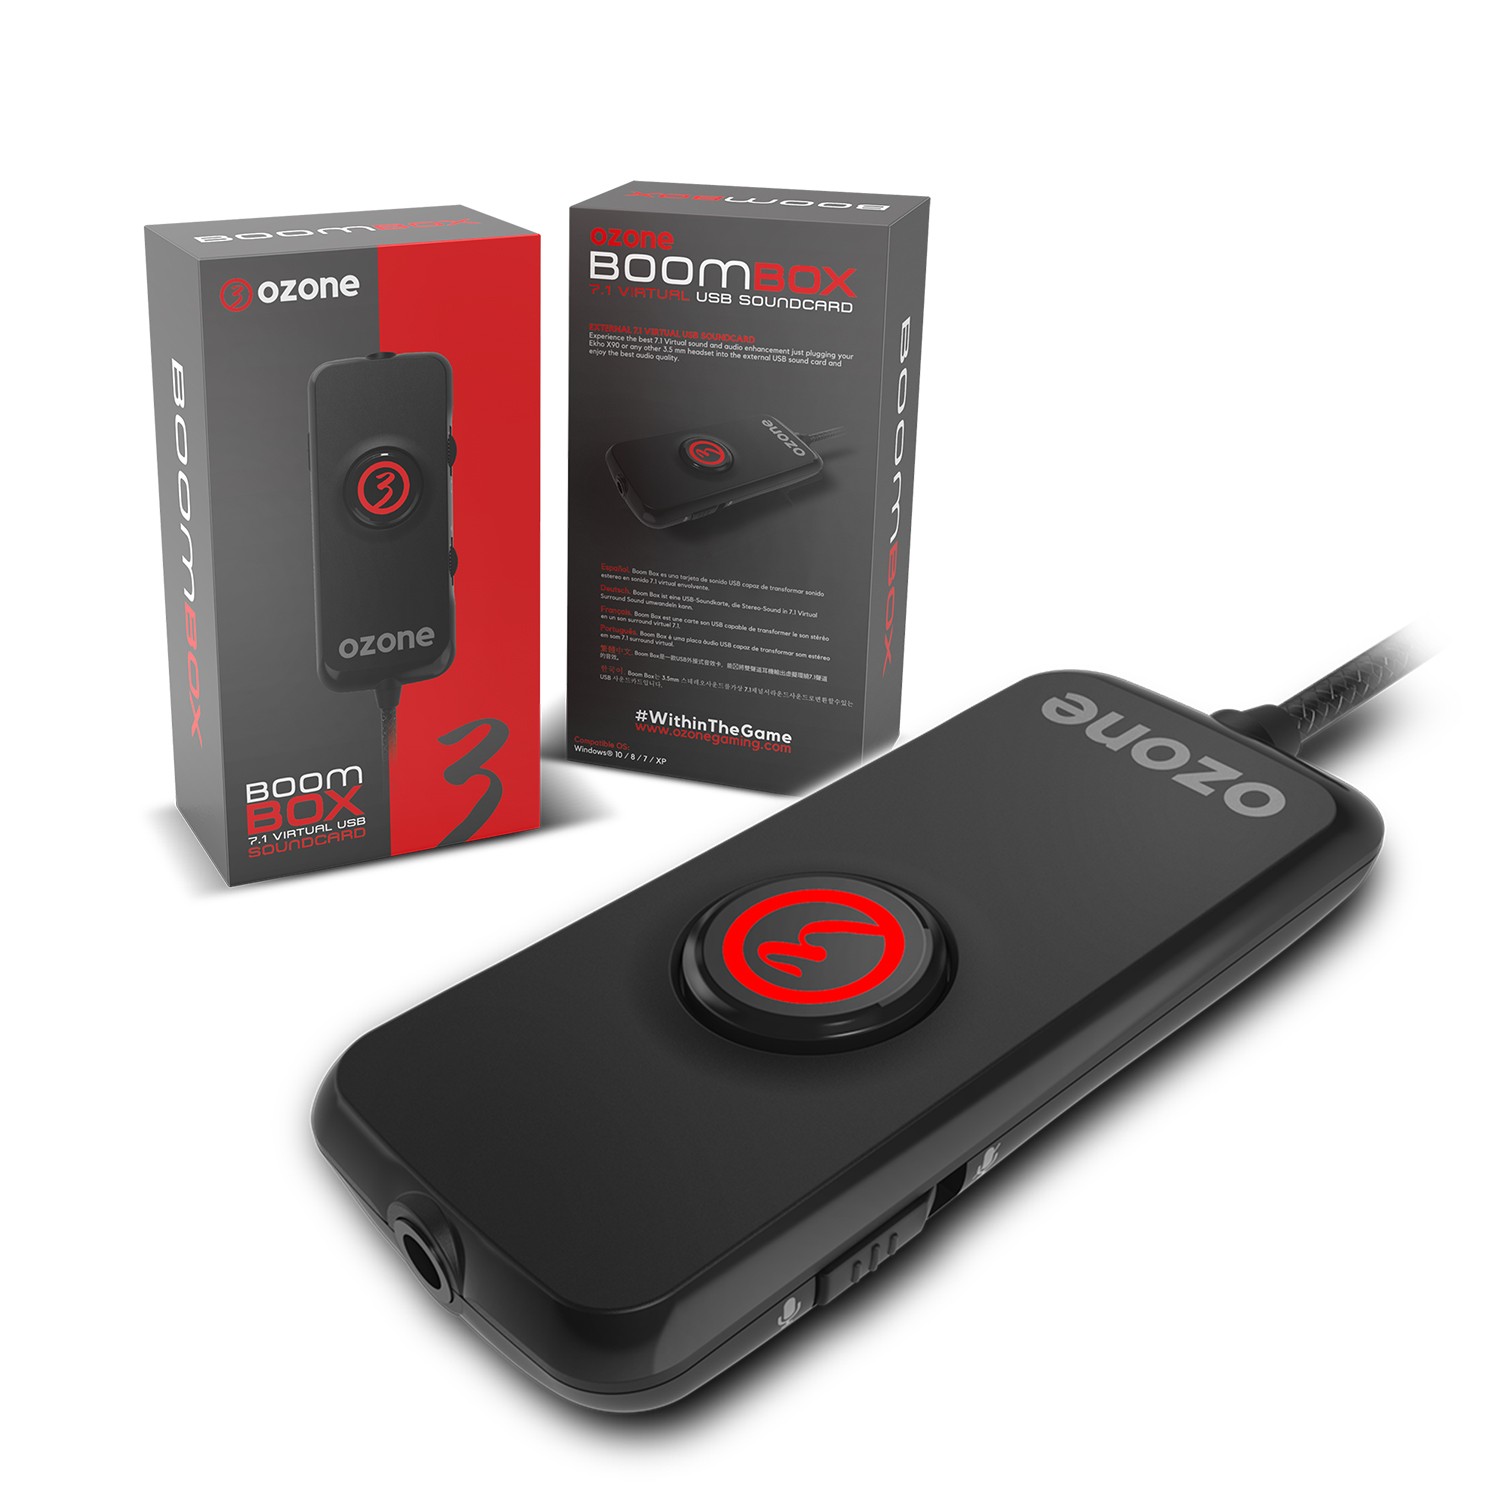 Carte son externe USB 7.1 Ozone Boombox compatible PS4, Switch, tablette,  mobile et PC